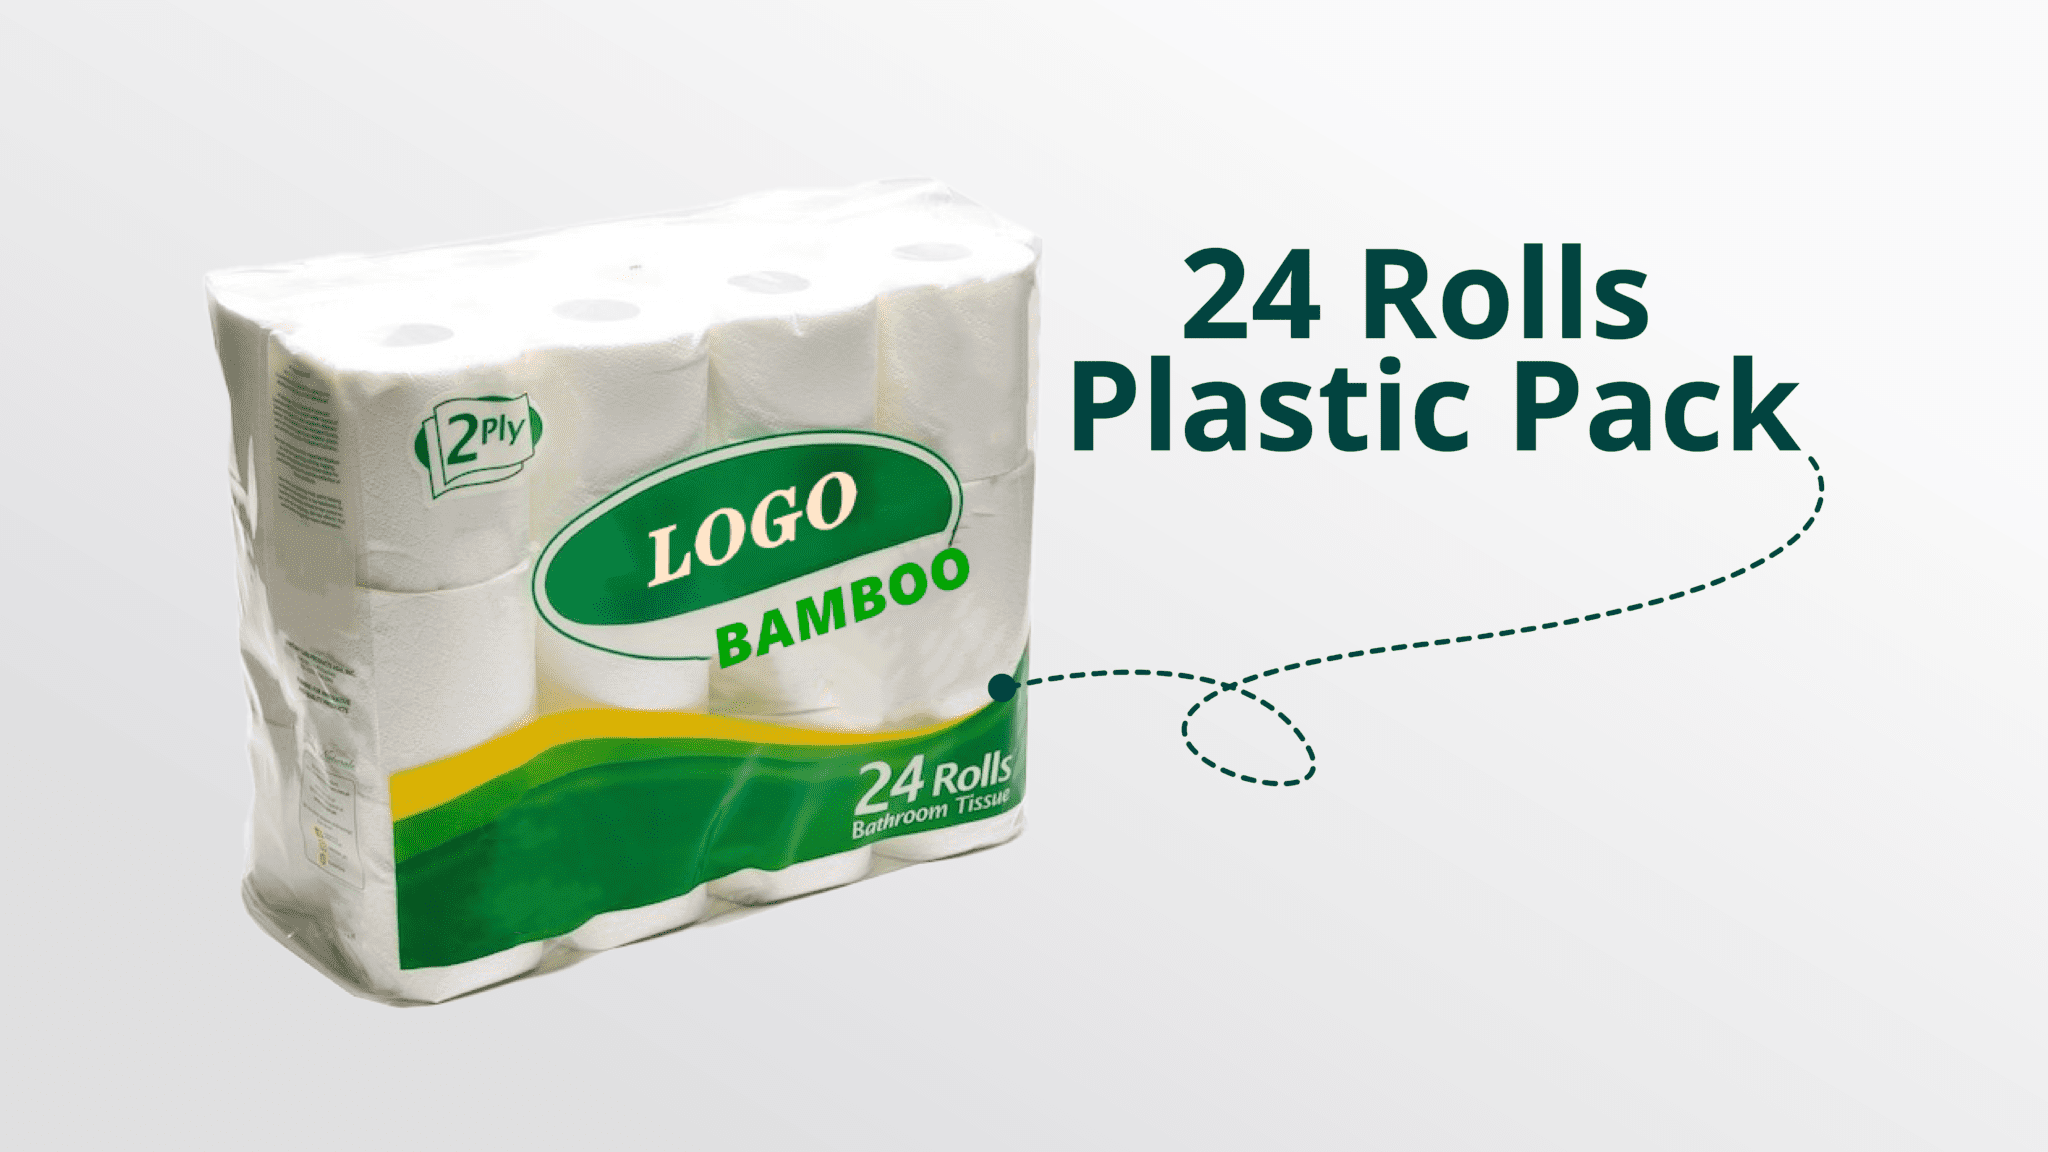 24 rolls plastic pack toilet paper